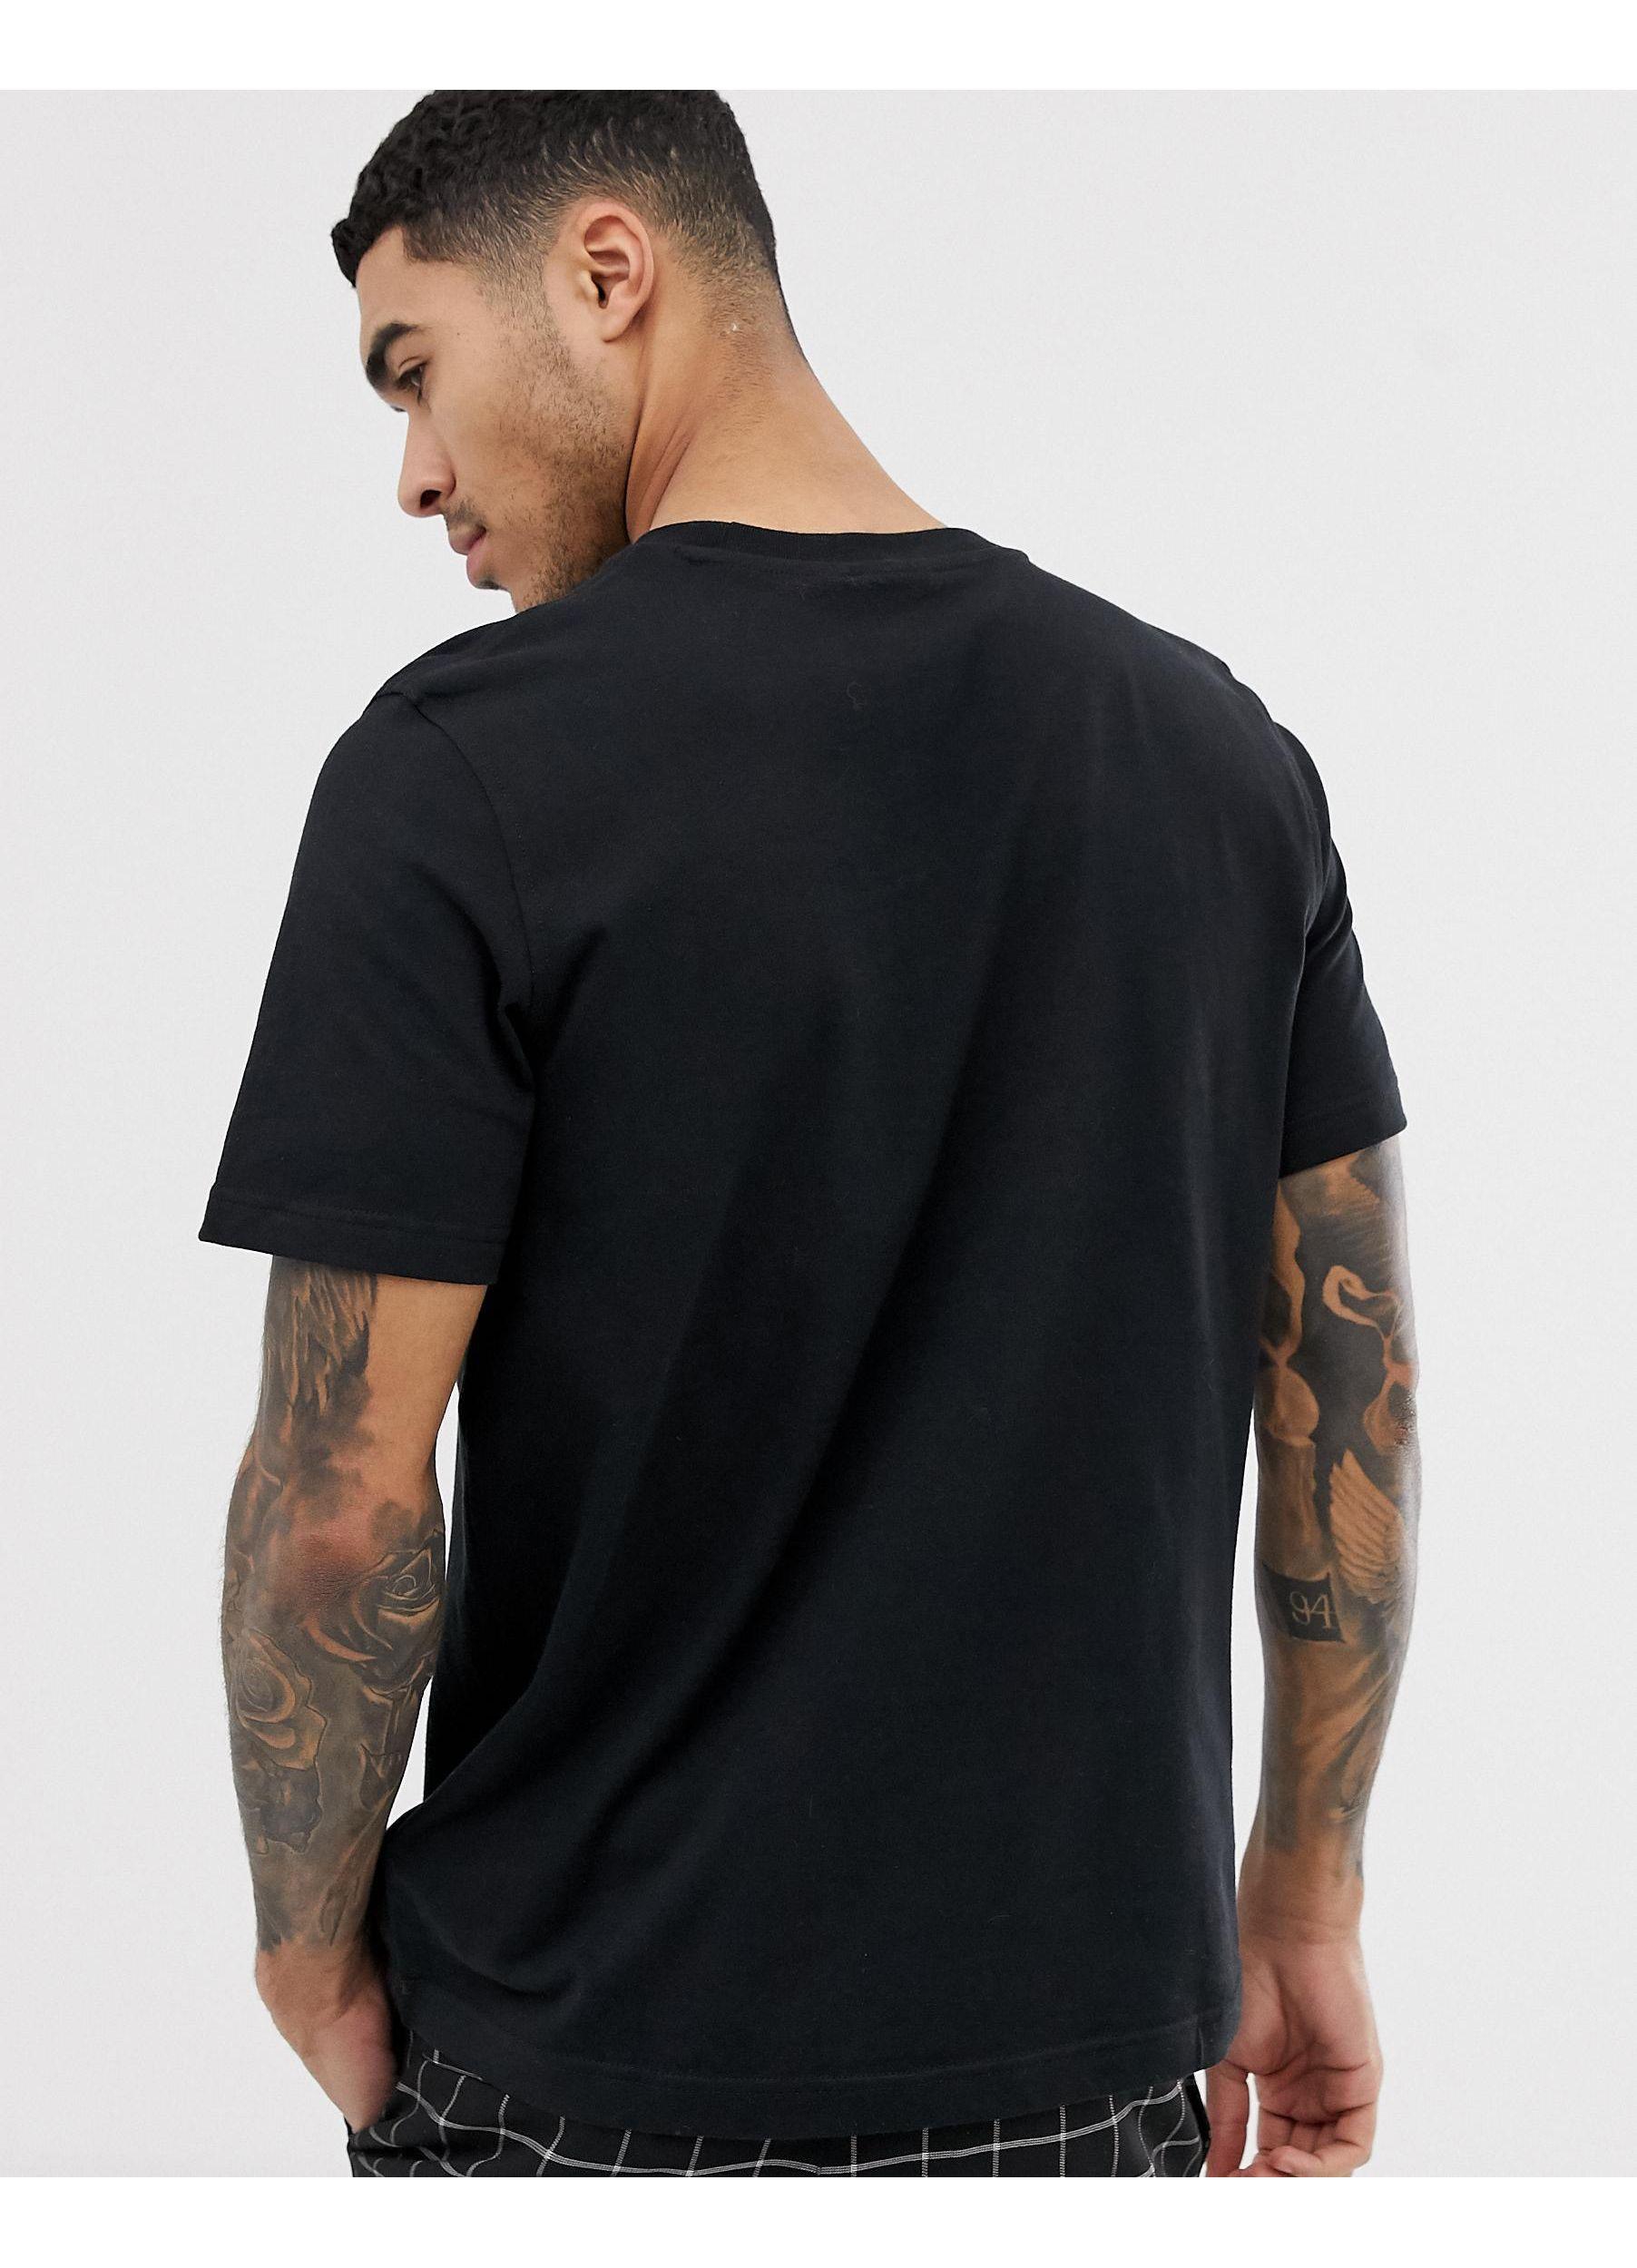 adidas Originals Trefoil T-shirt in Black for Men | Lyst